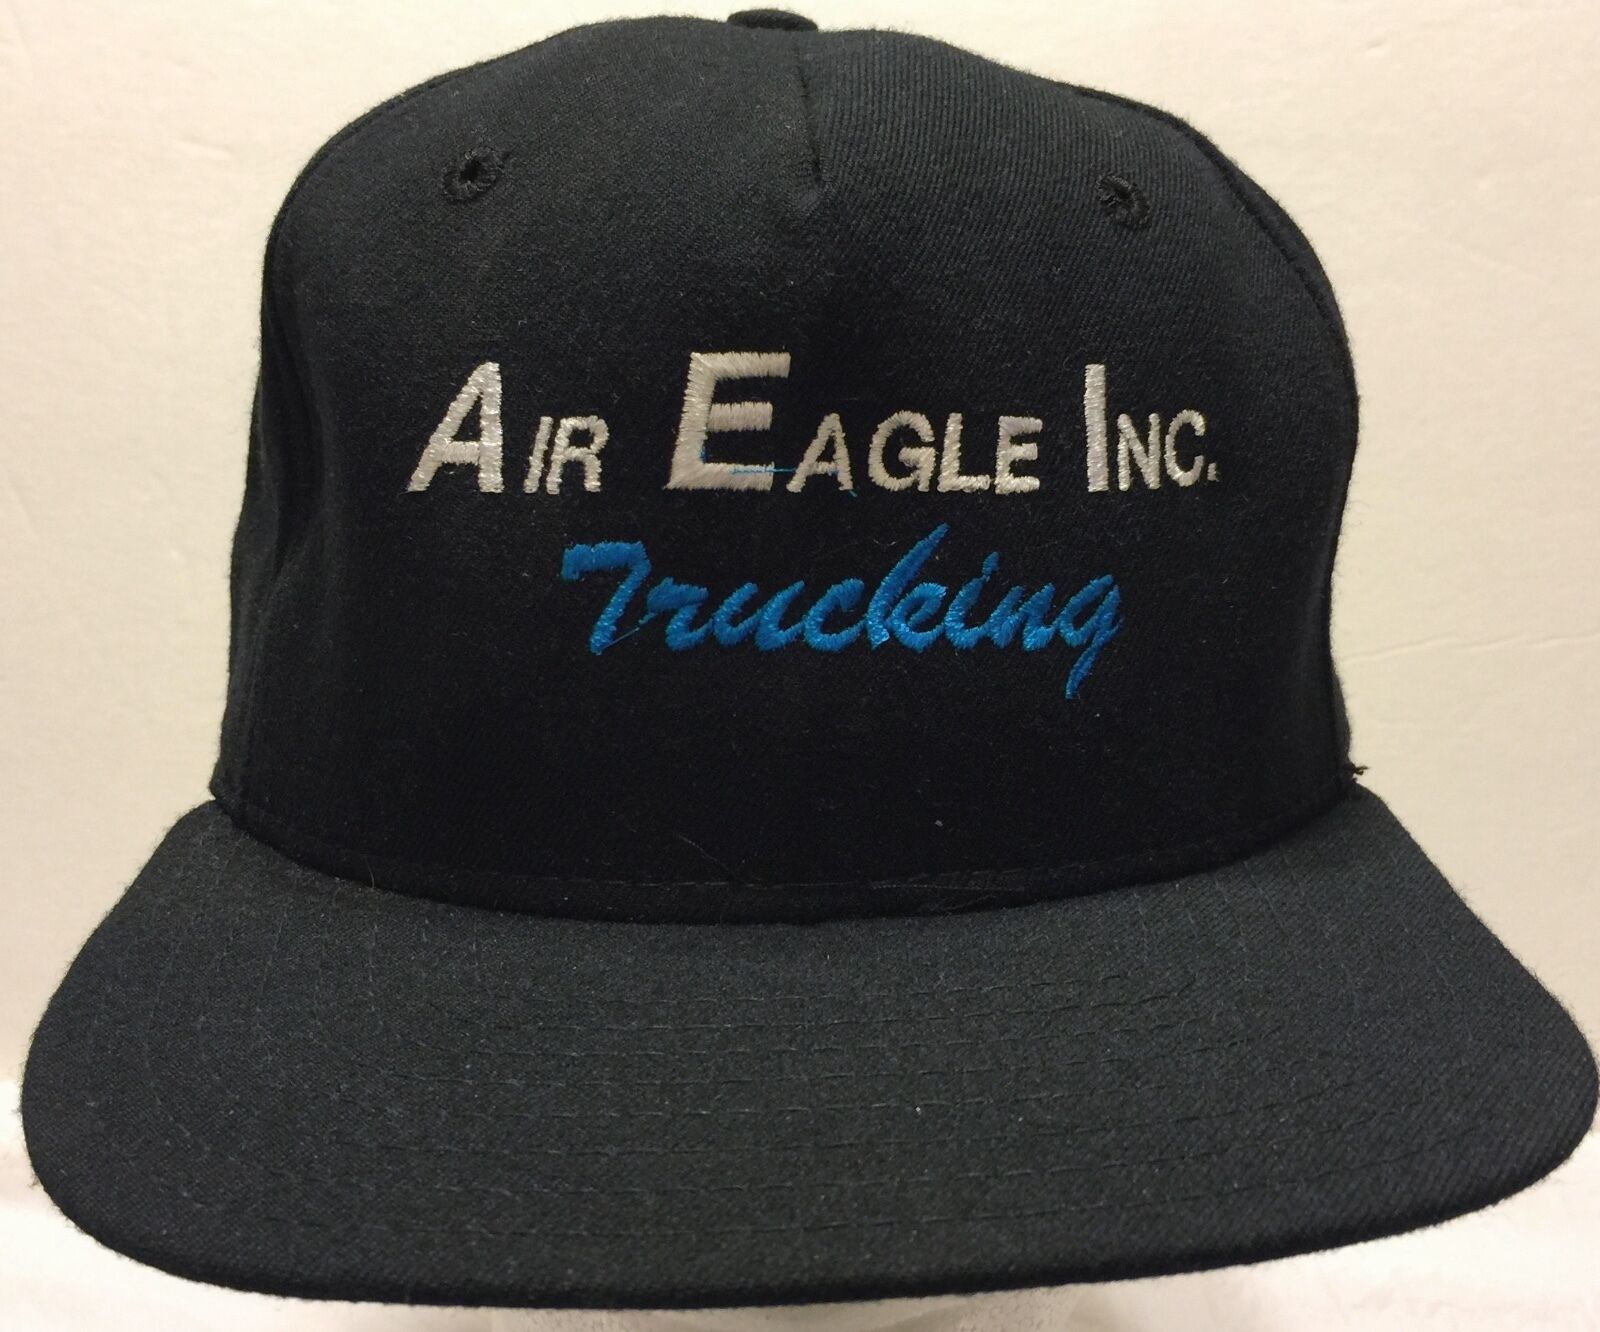 Primary image for Vtg New Era Air Eagle Trucking, Inc. New Era Black Snapback Hat Freight Shipping